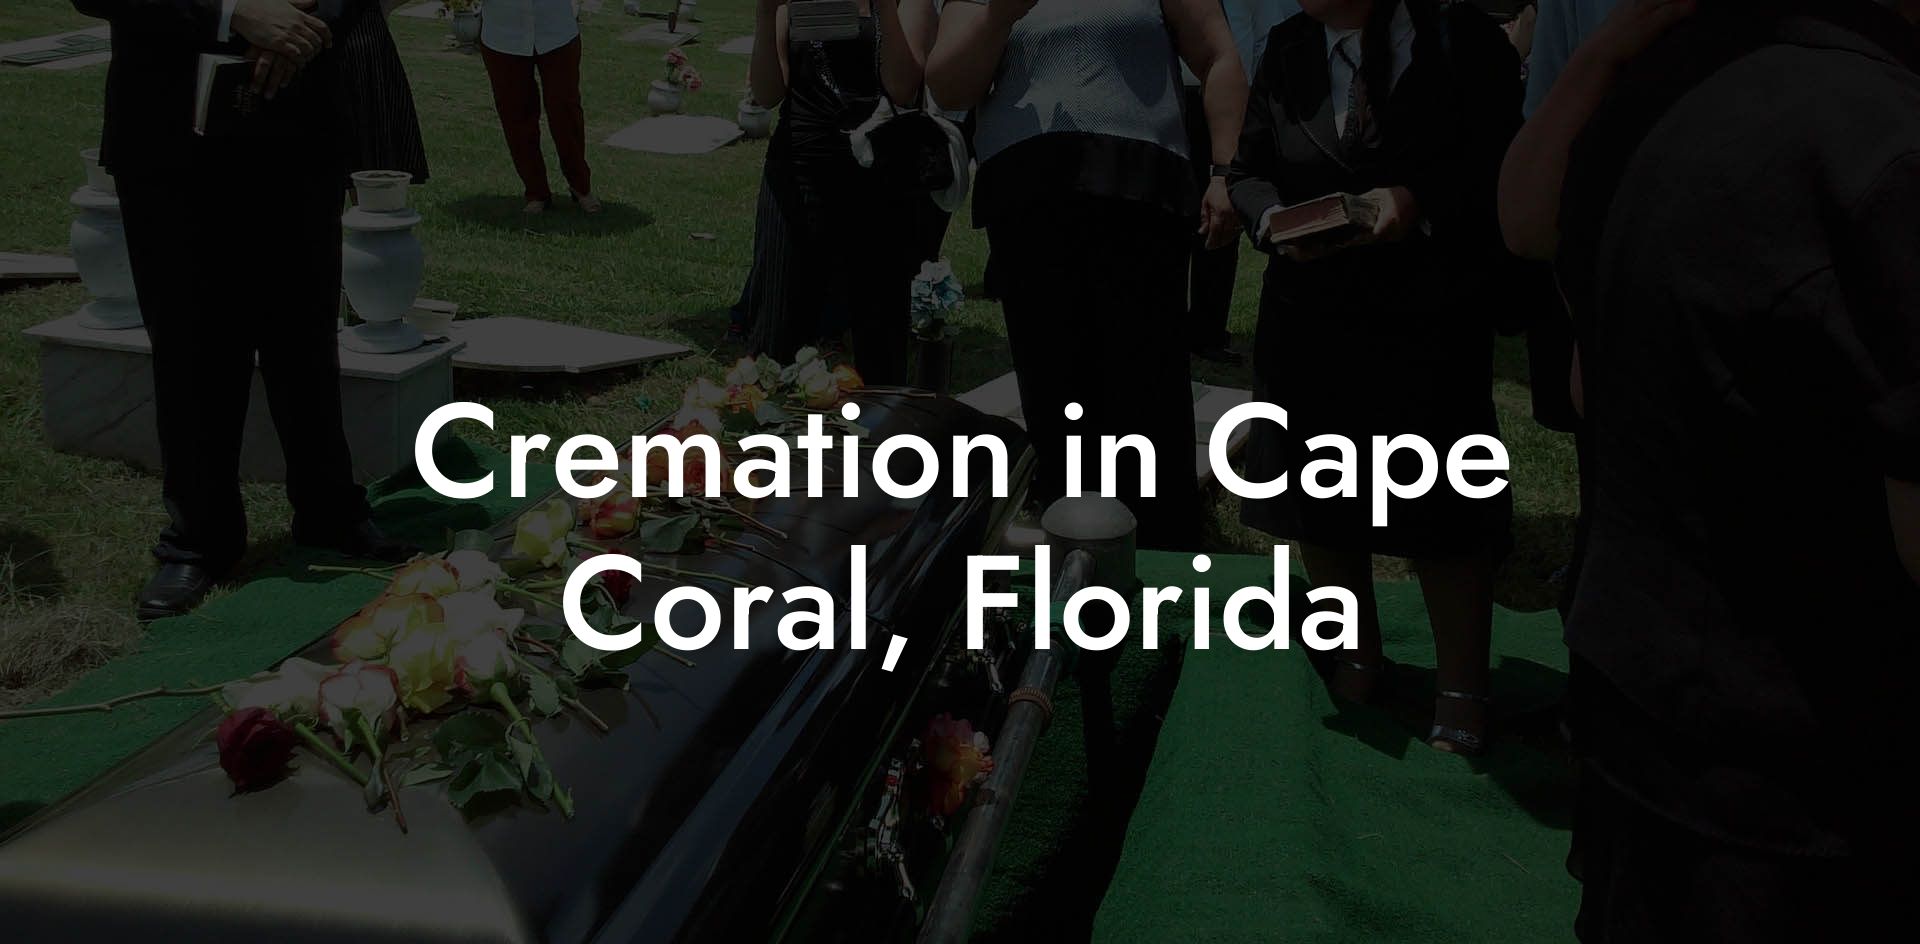 Cremation in Cape Coral, Florida